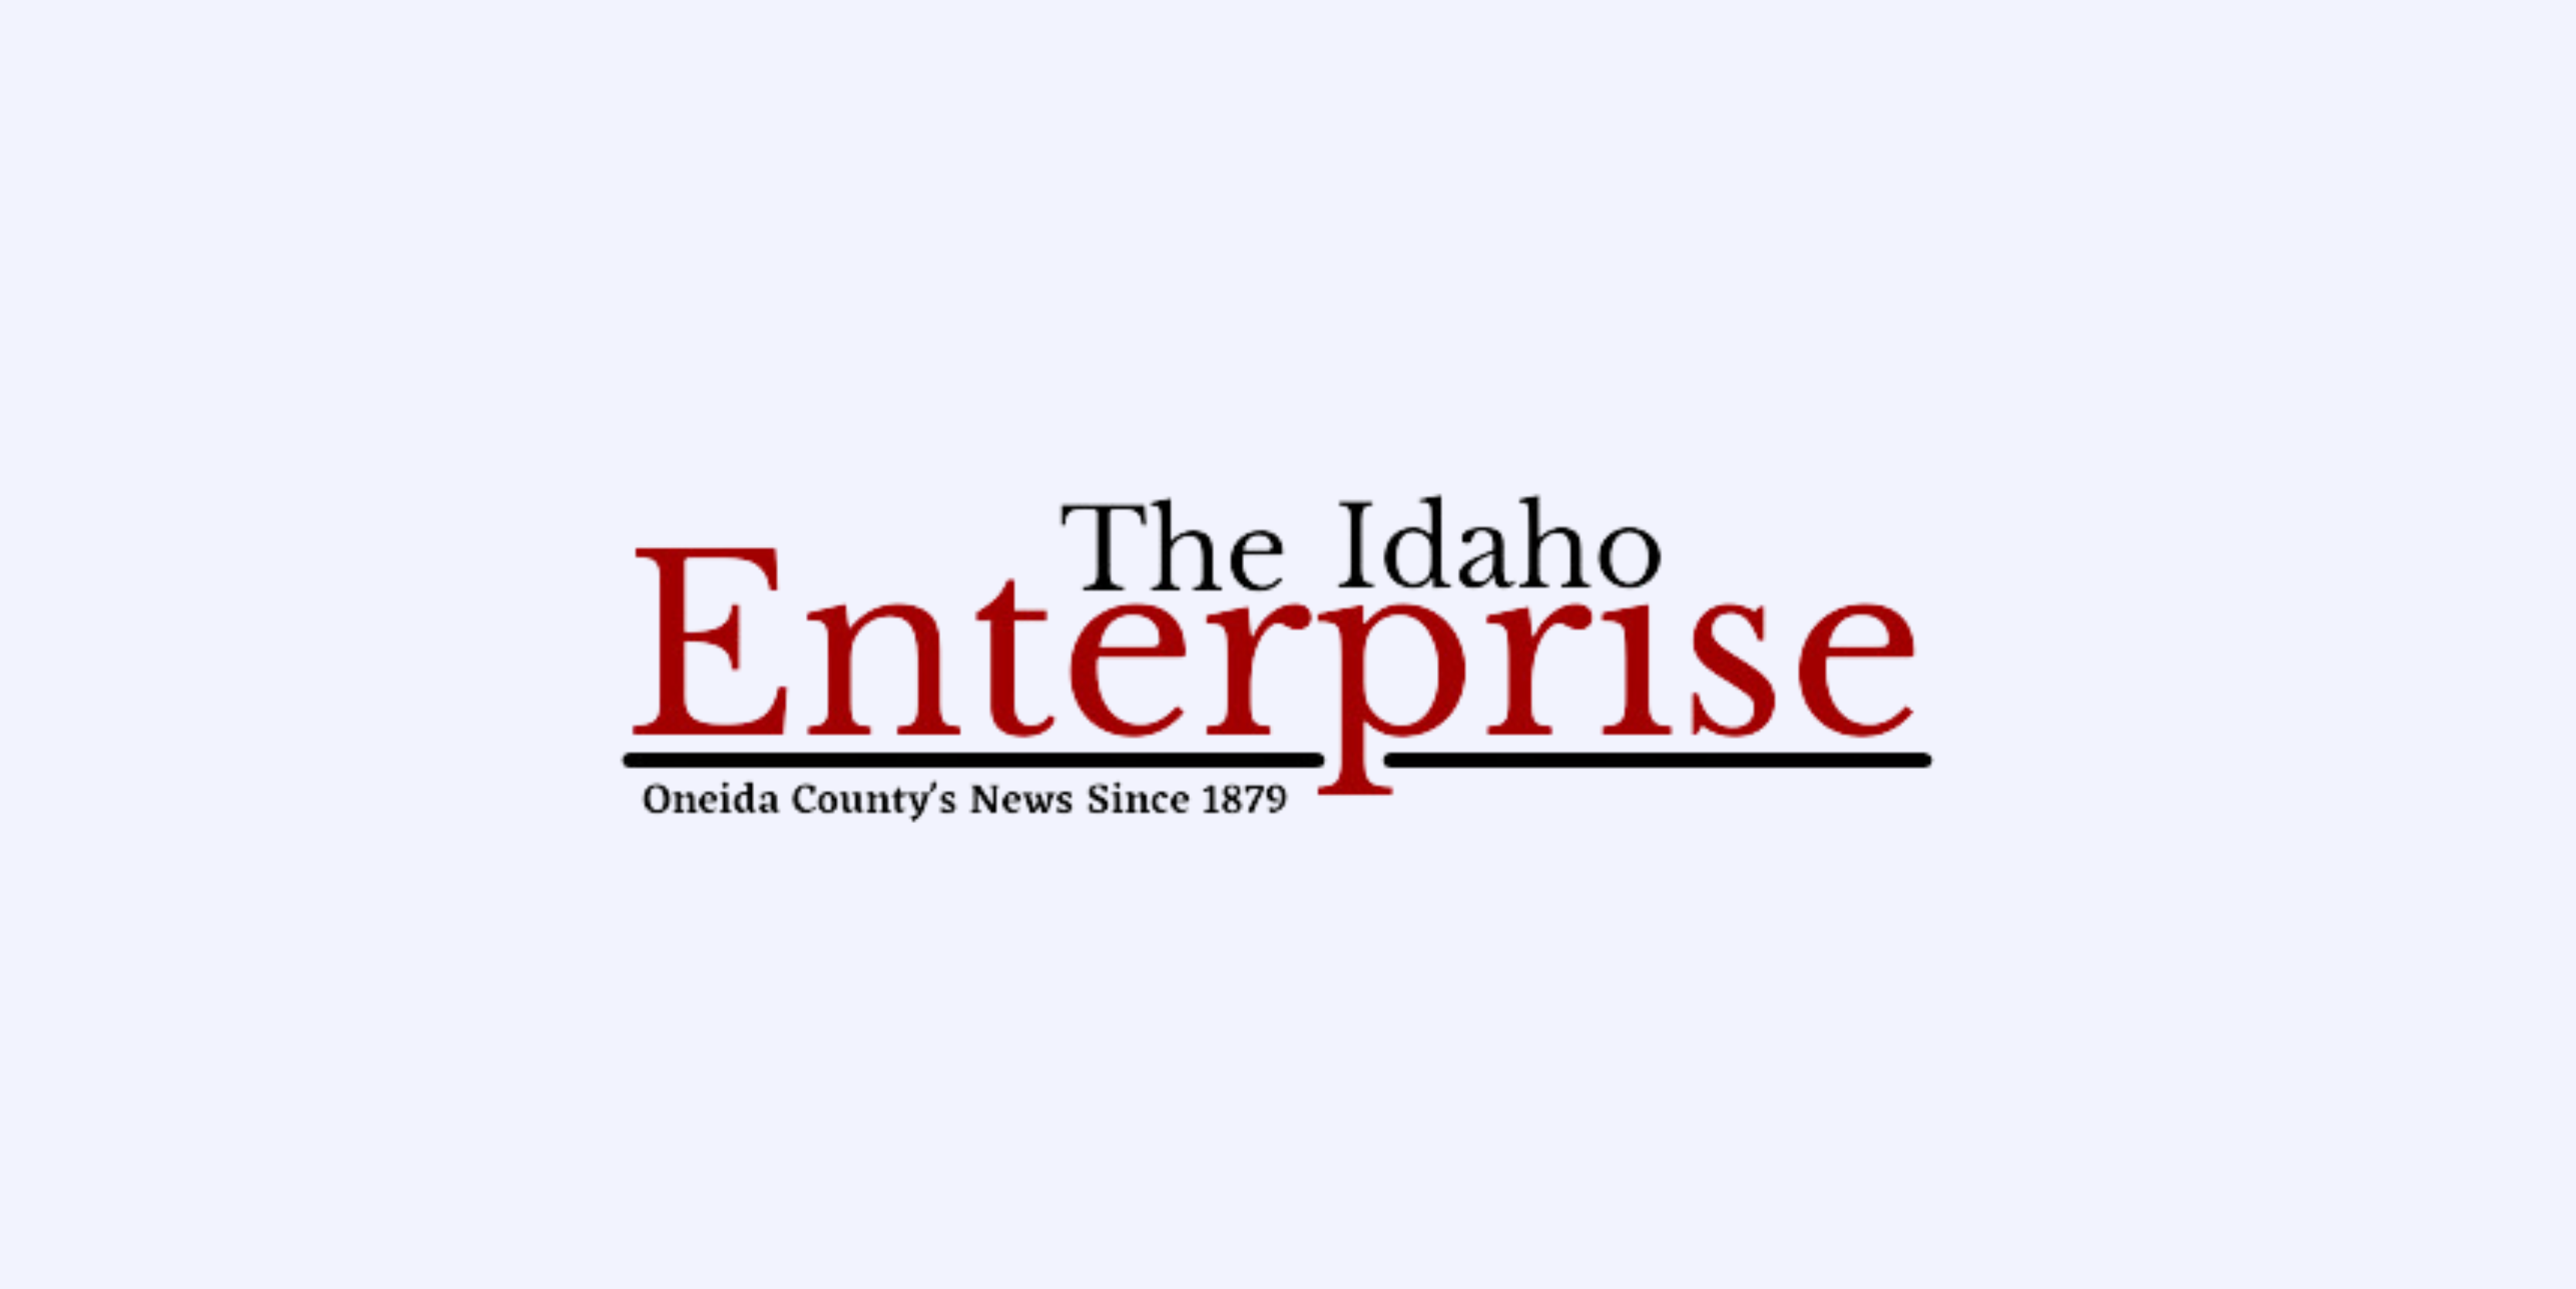 The Idaho Enterprise